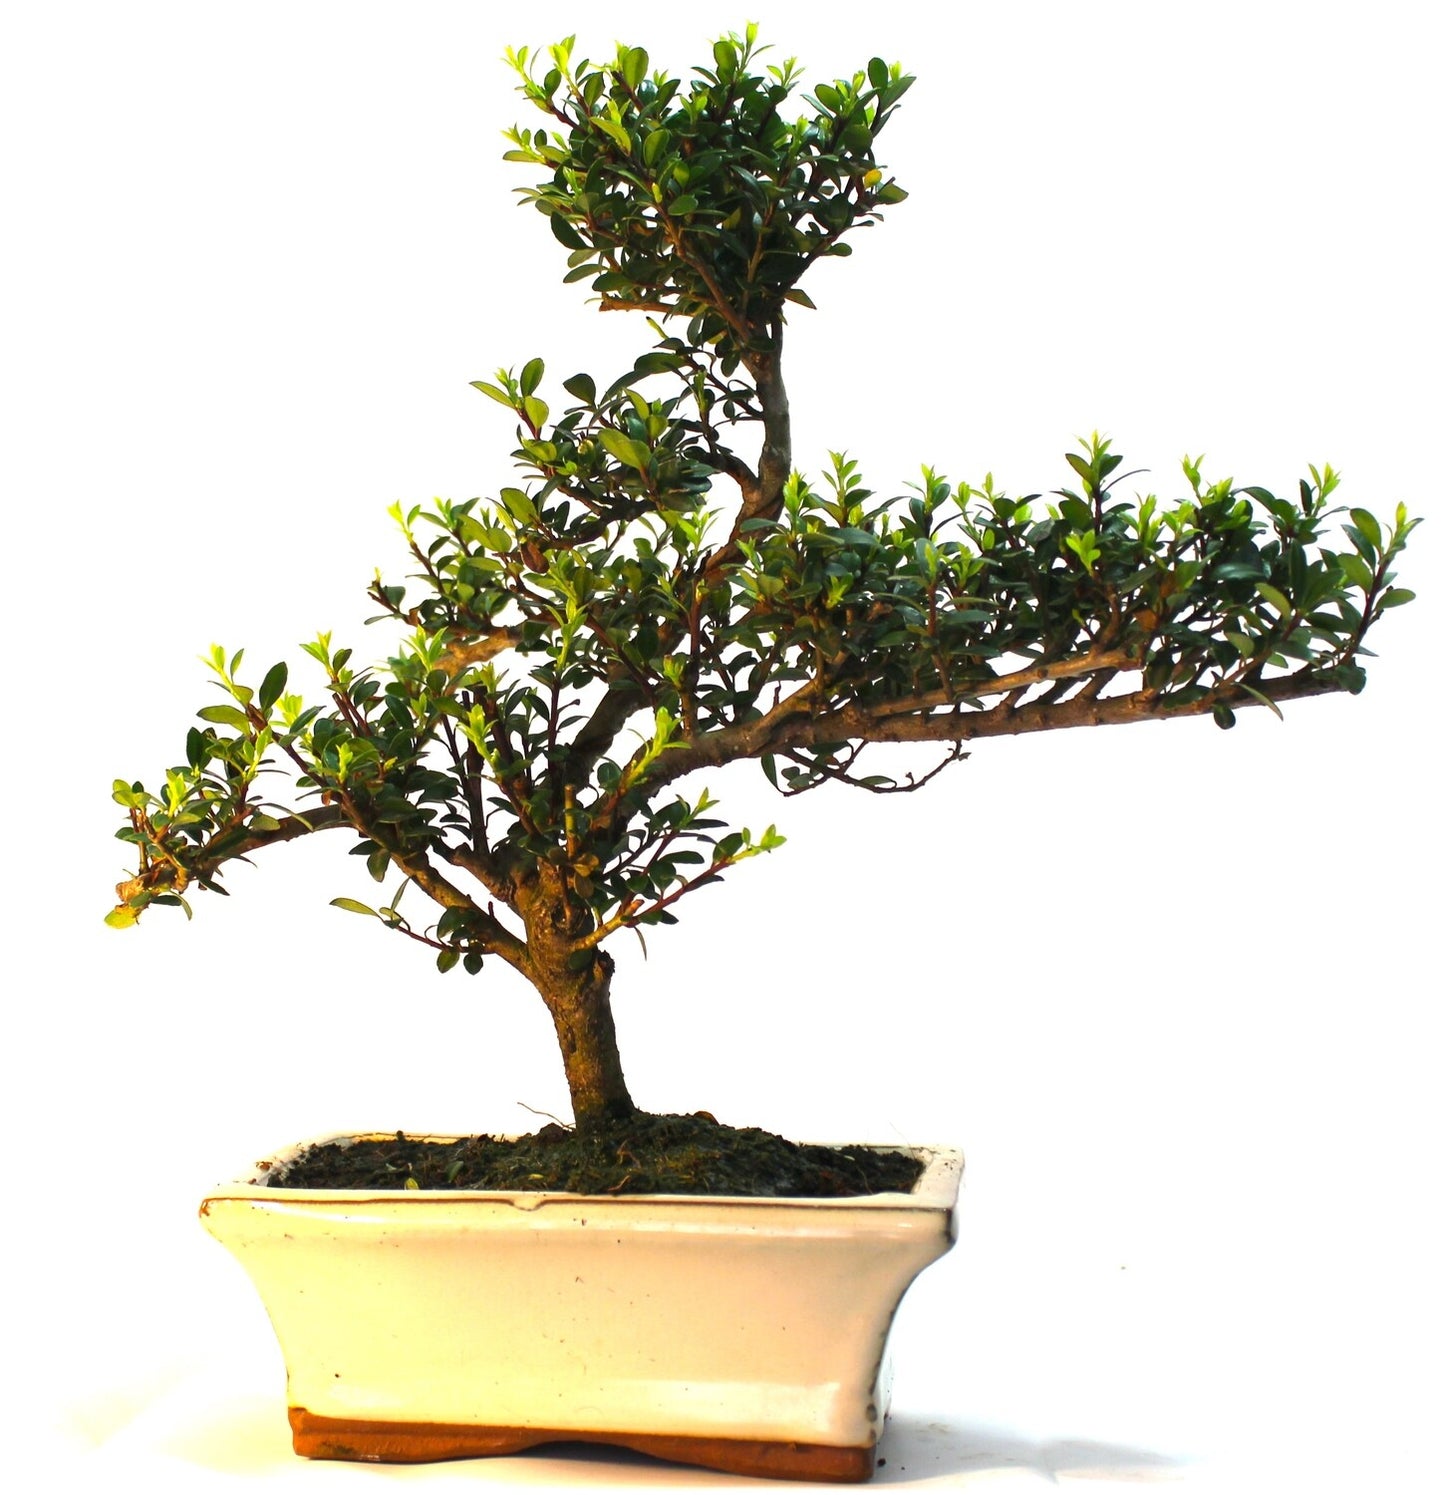 Ilex Bonsai Tree informal upright - supplied in
a ceramic pot